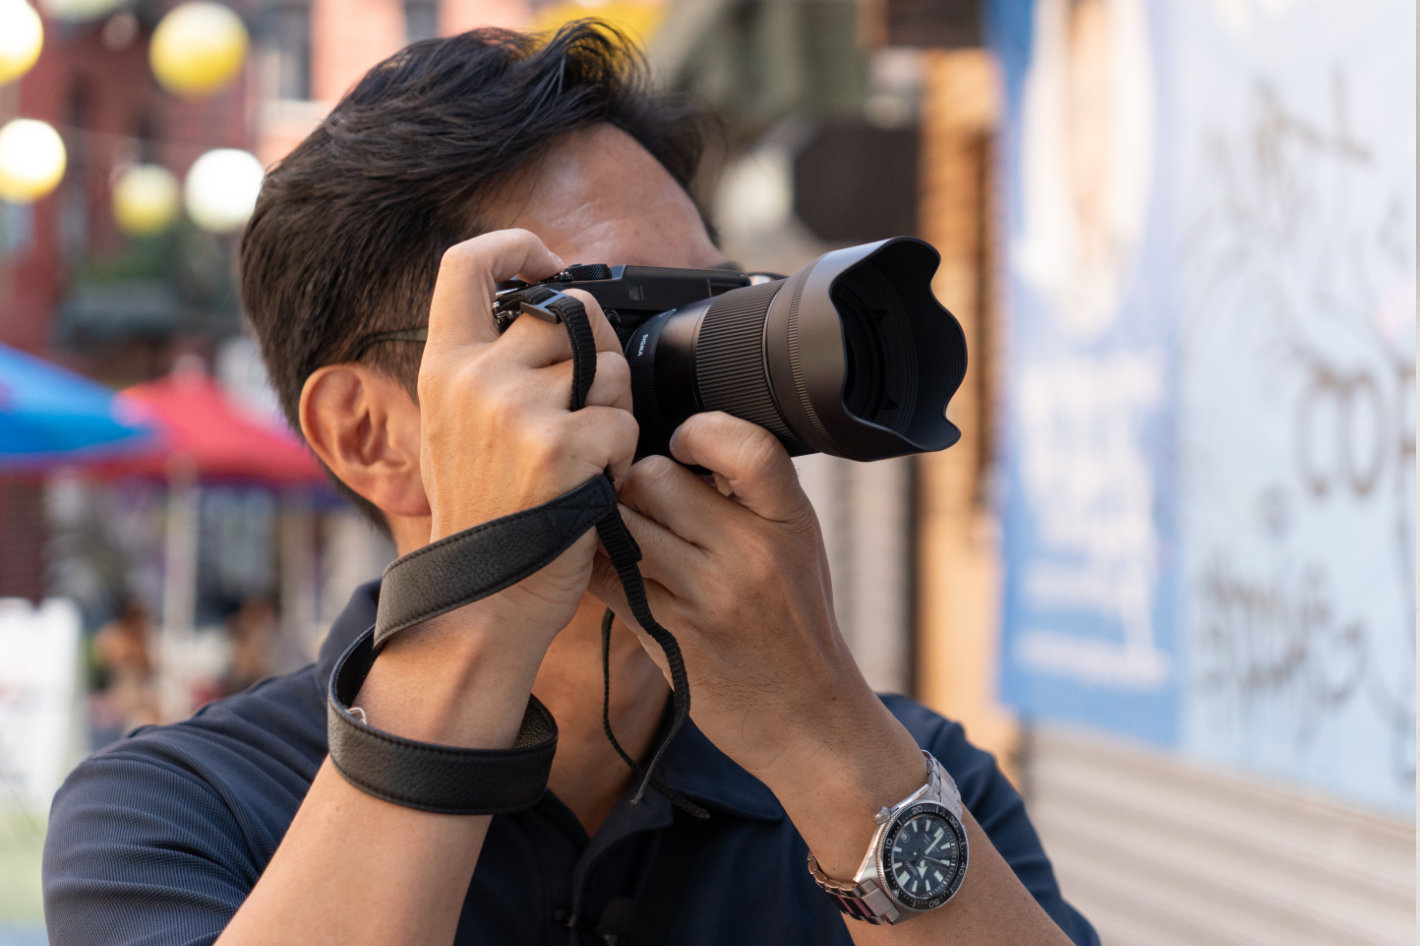 SIGMA announces two new lenses  for Fujifilm X cameras